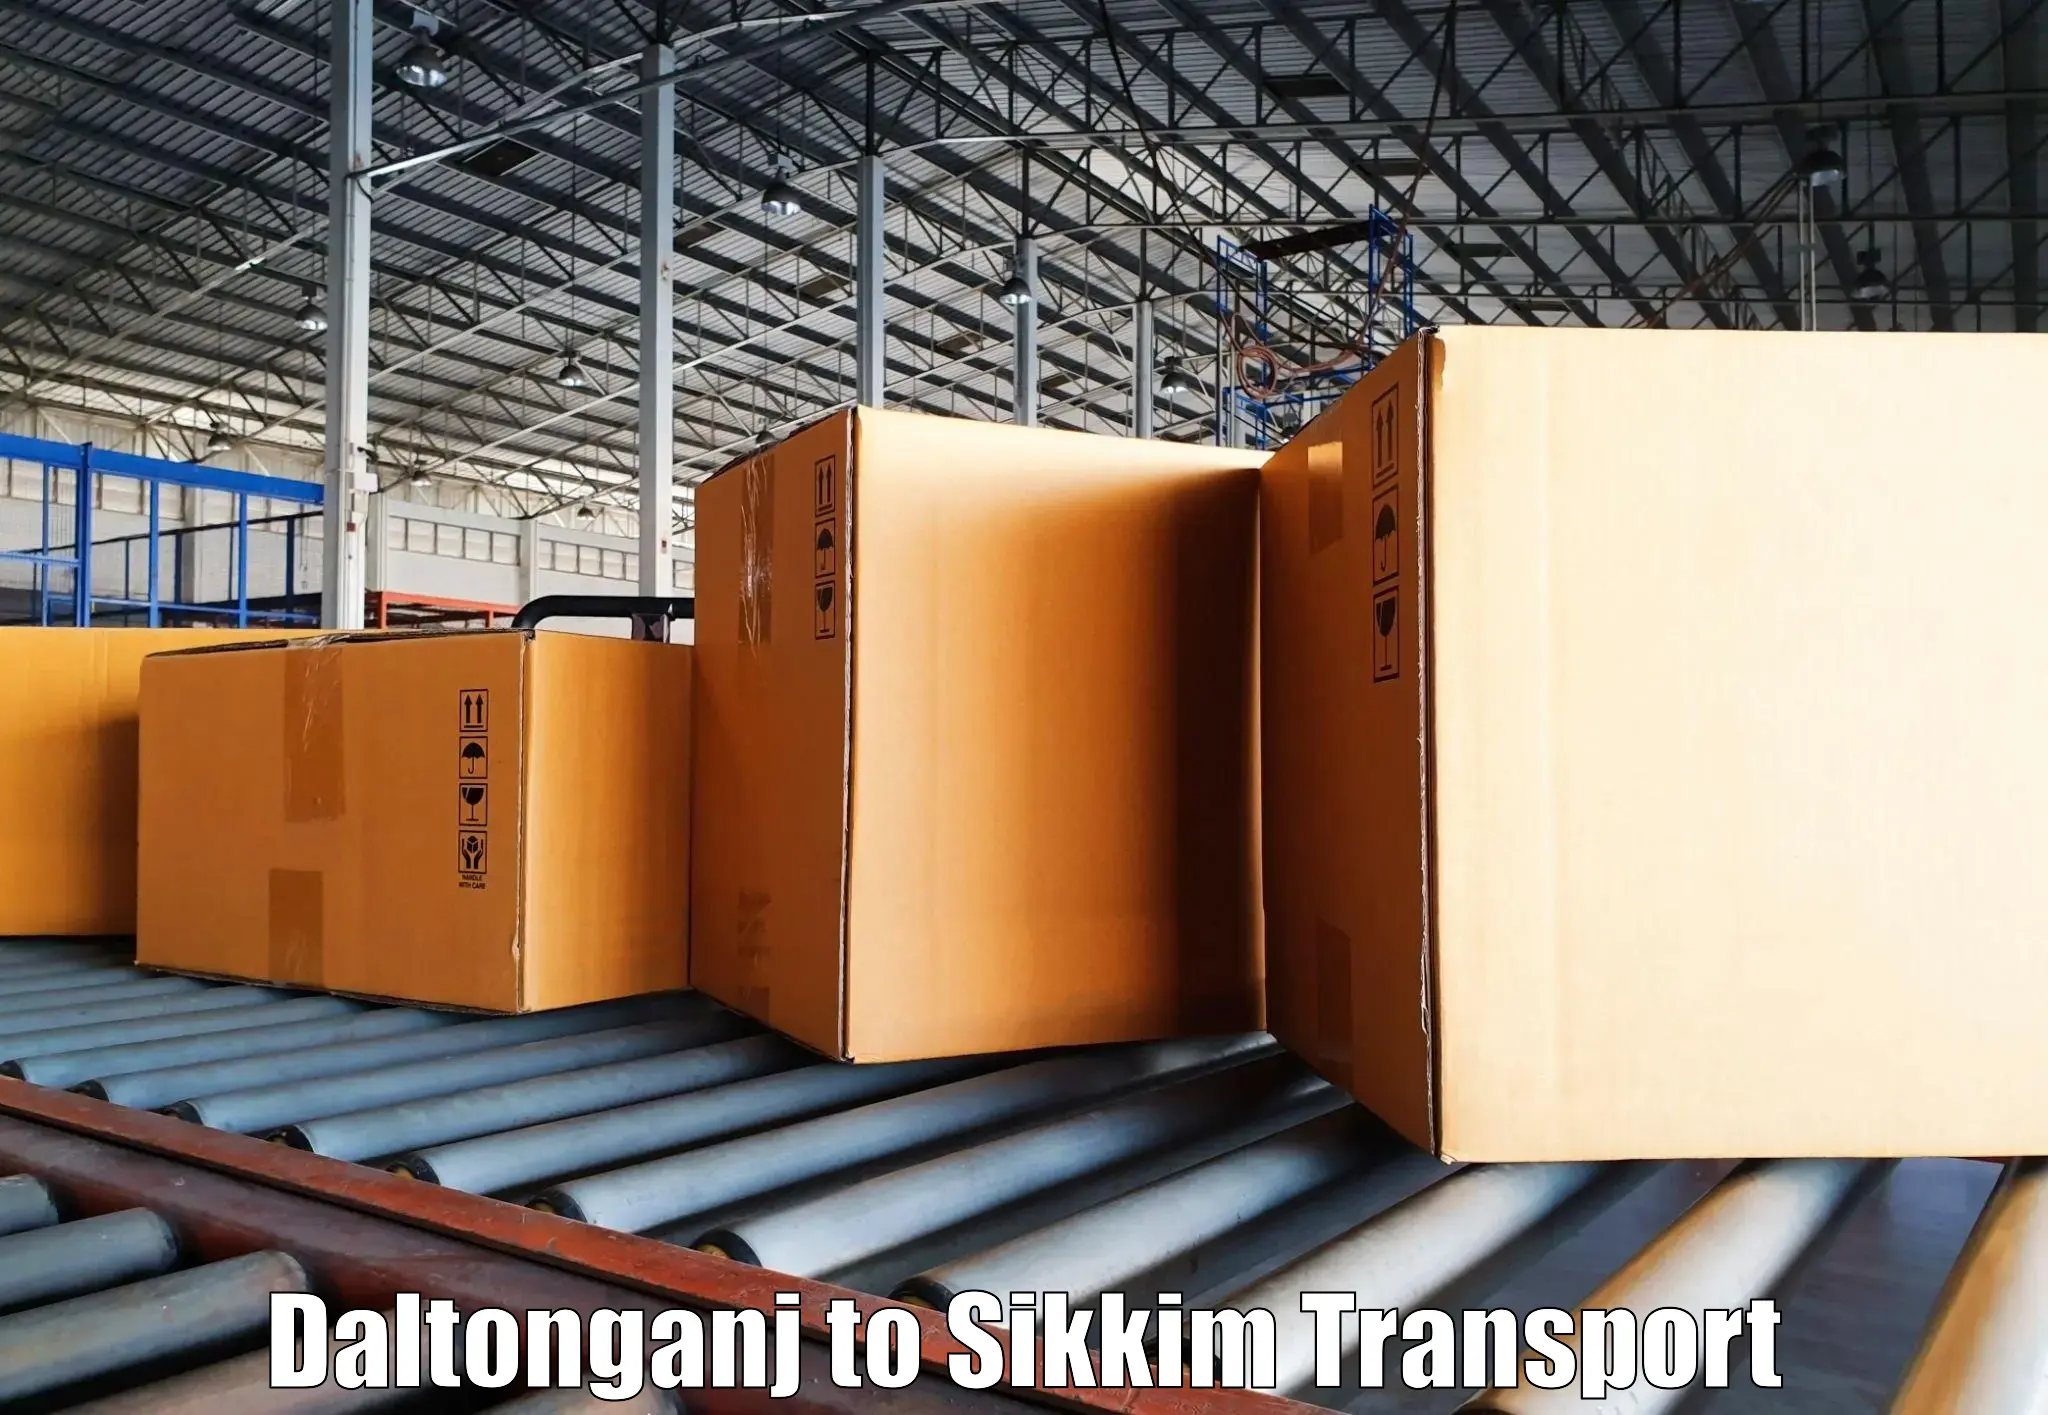 Transport in sharing in Daltonganj to Gangtok